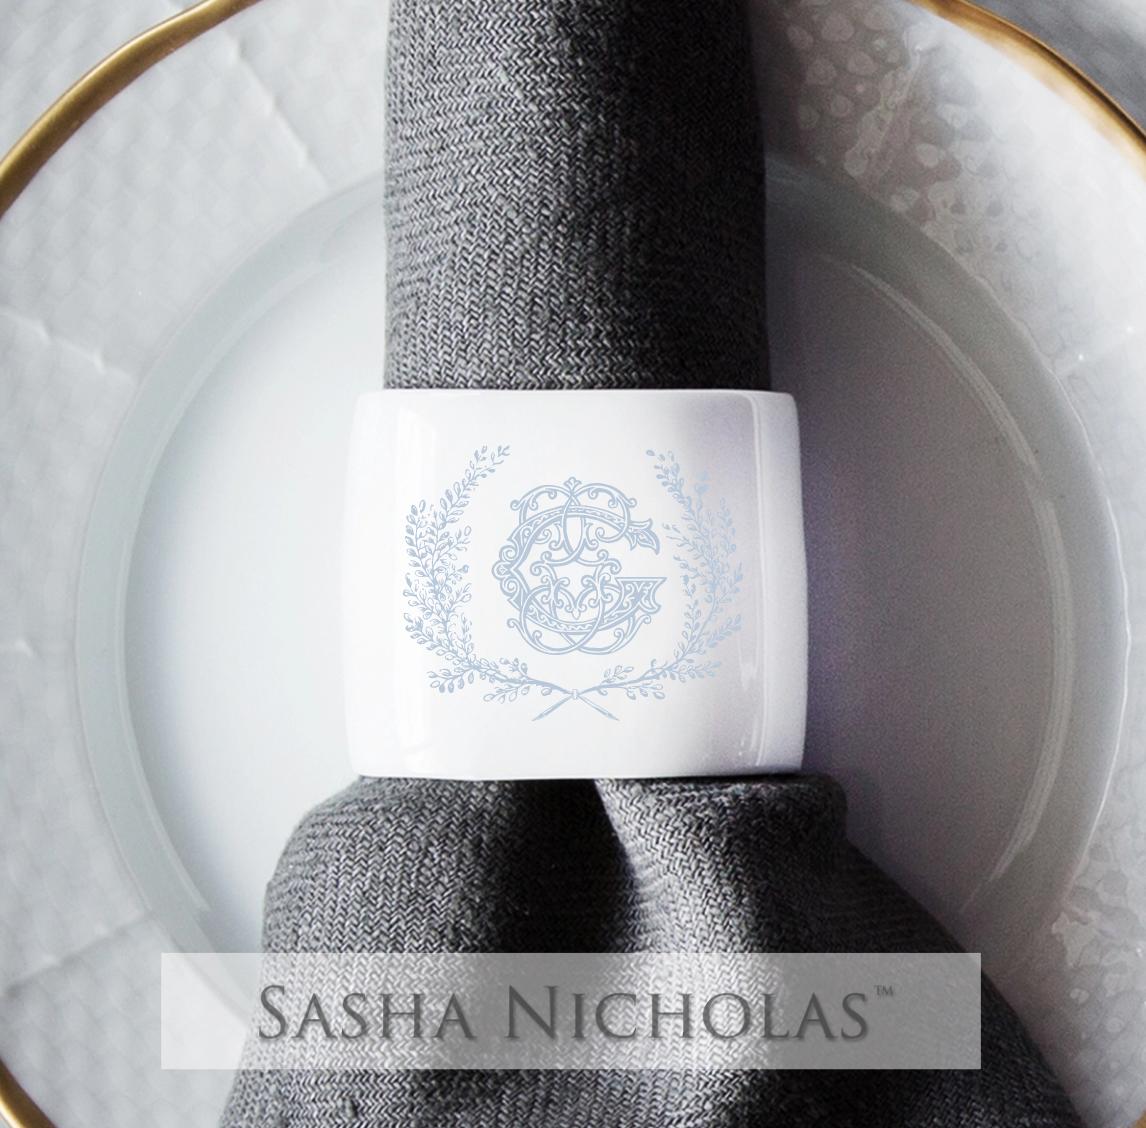 Sasha Nicholas Nolley-Gruninger Oval Napkin Ring 